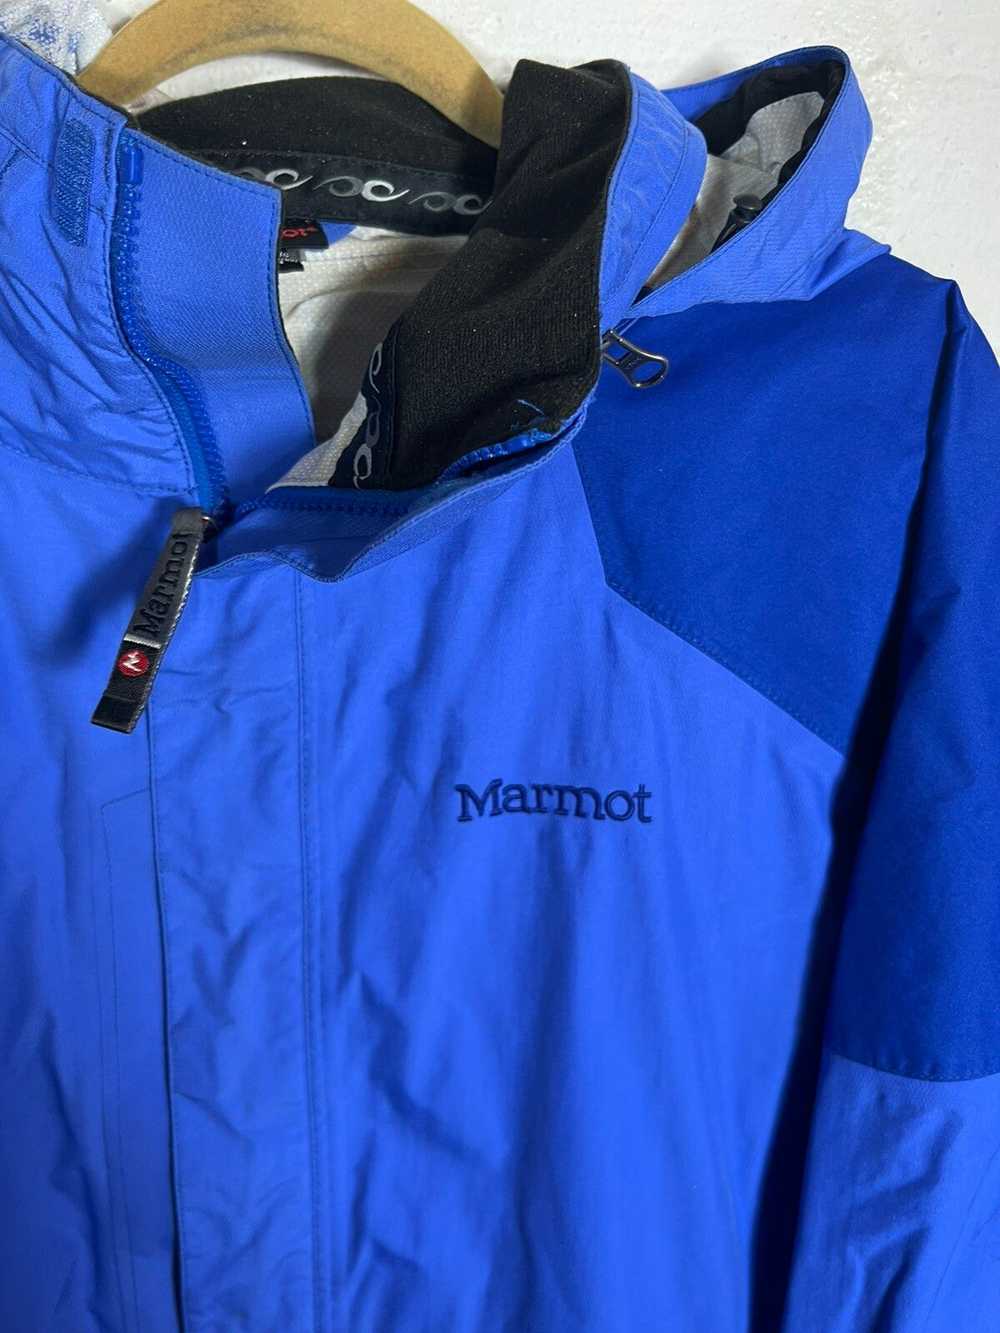 Marmot MARMOT BLUE HOODED RAIN JACKET FULL ZIP XL - image 6